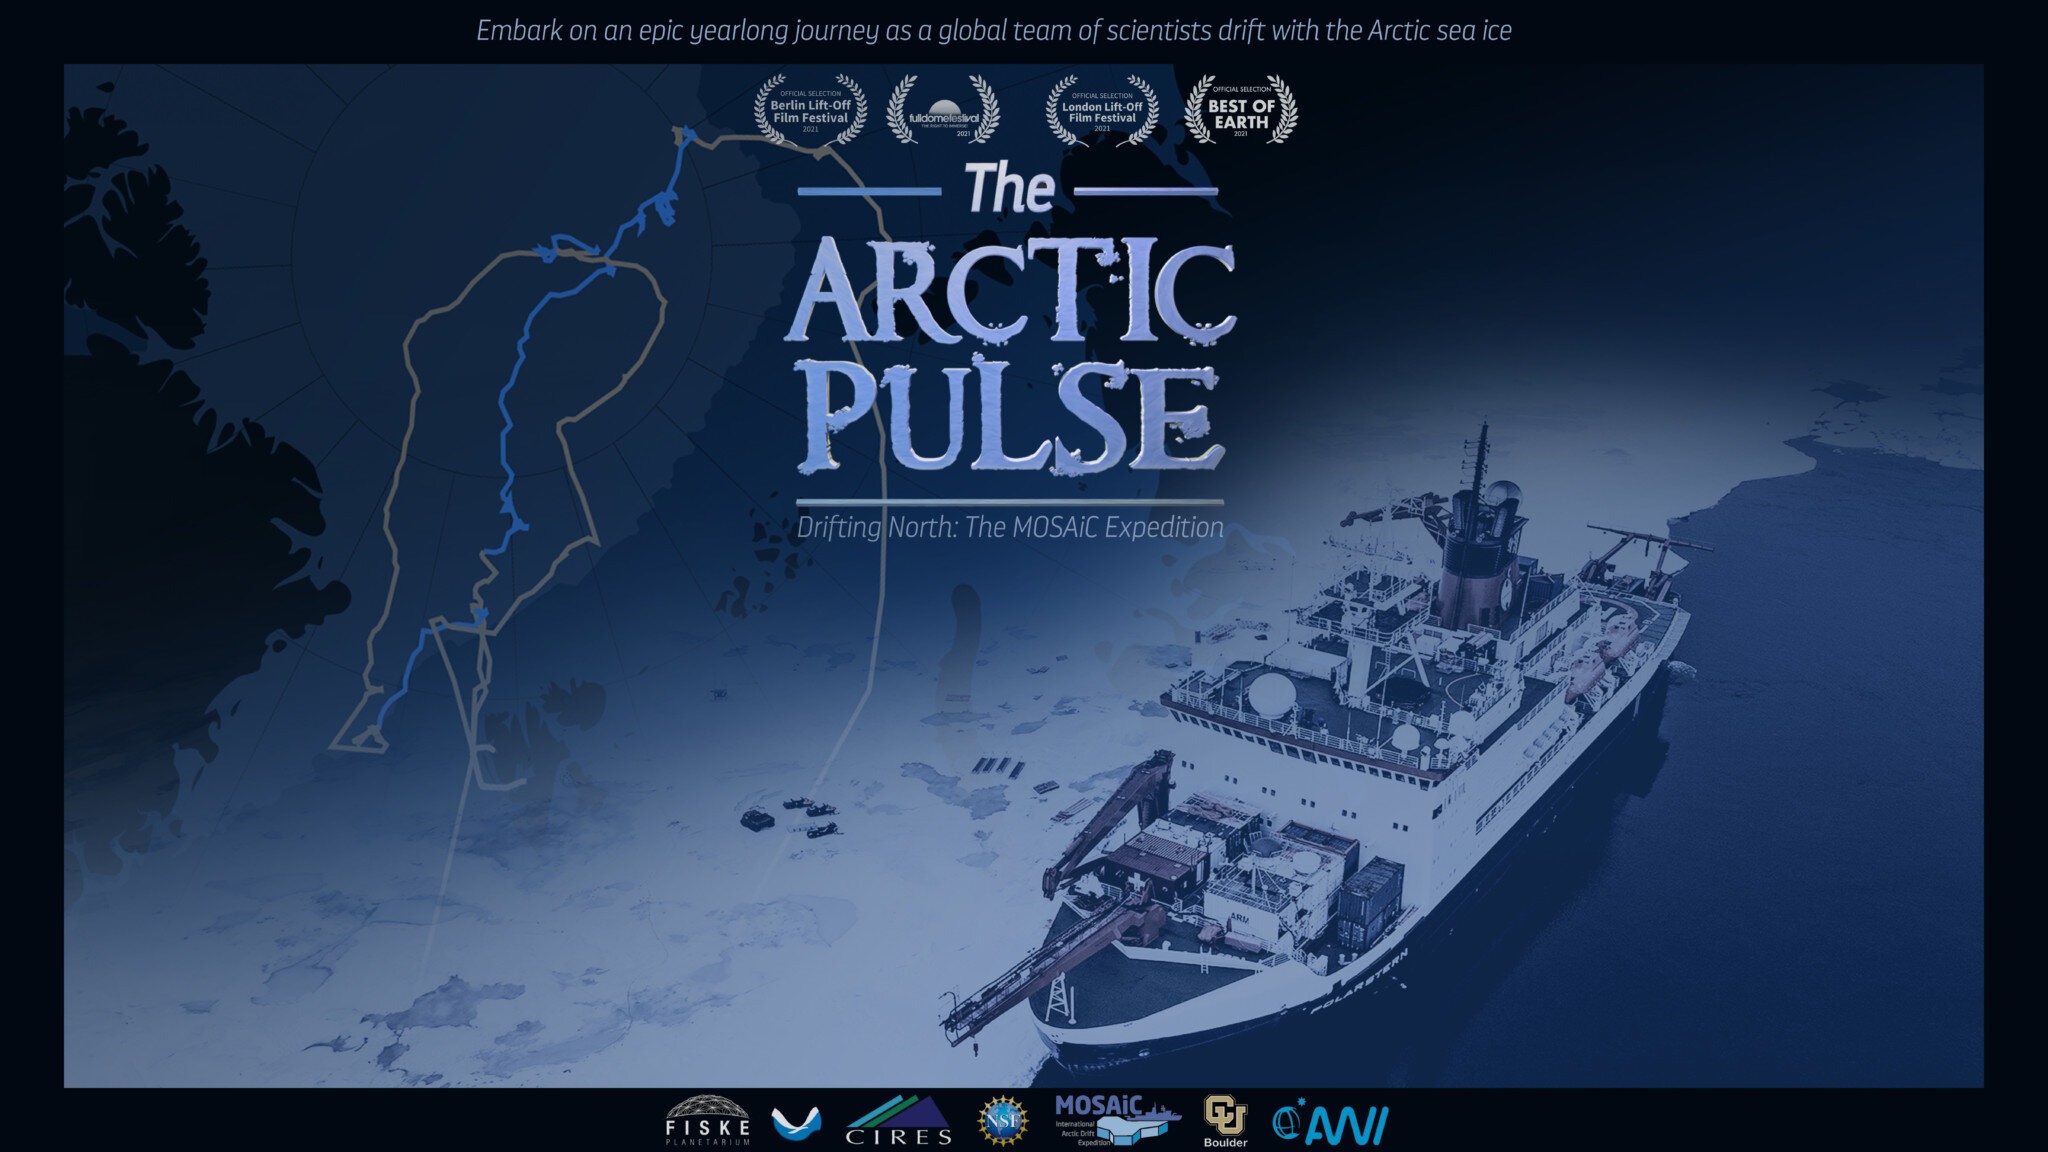 Drifting North The Arctic Pulse